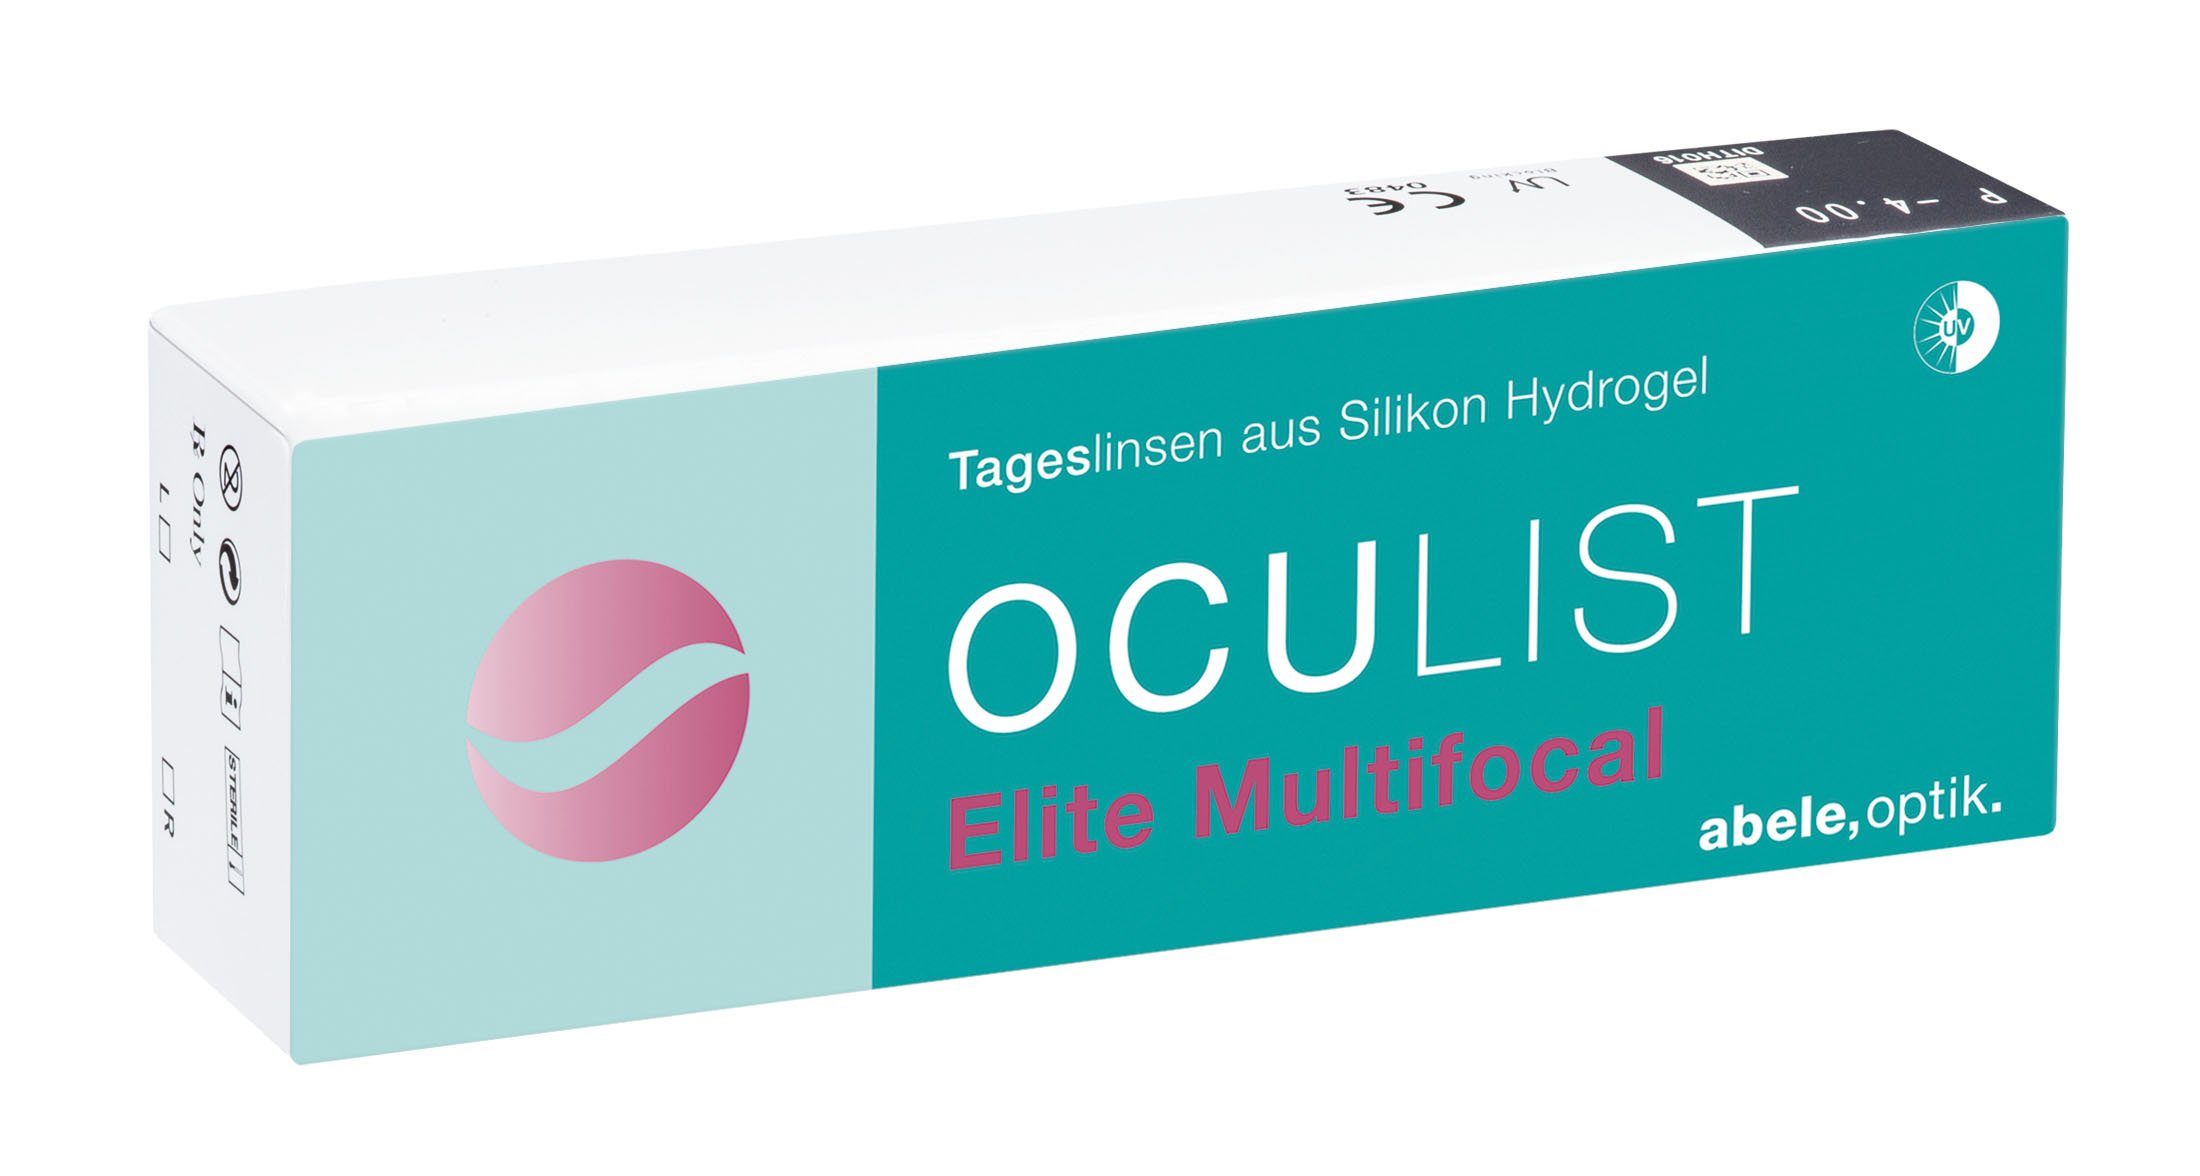 Oculist Elite Multifocal Tageslinse, Abele Optik (60 Stk.)